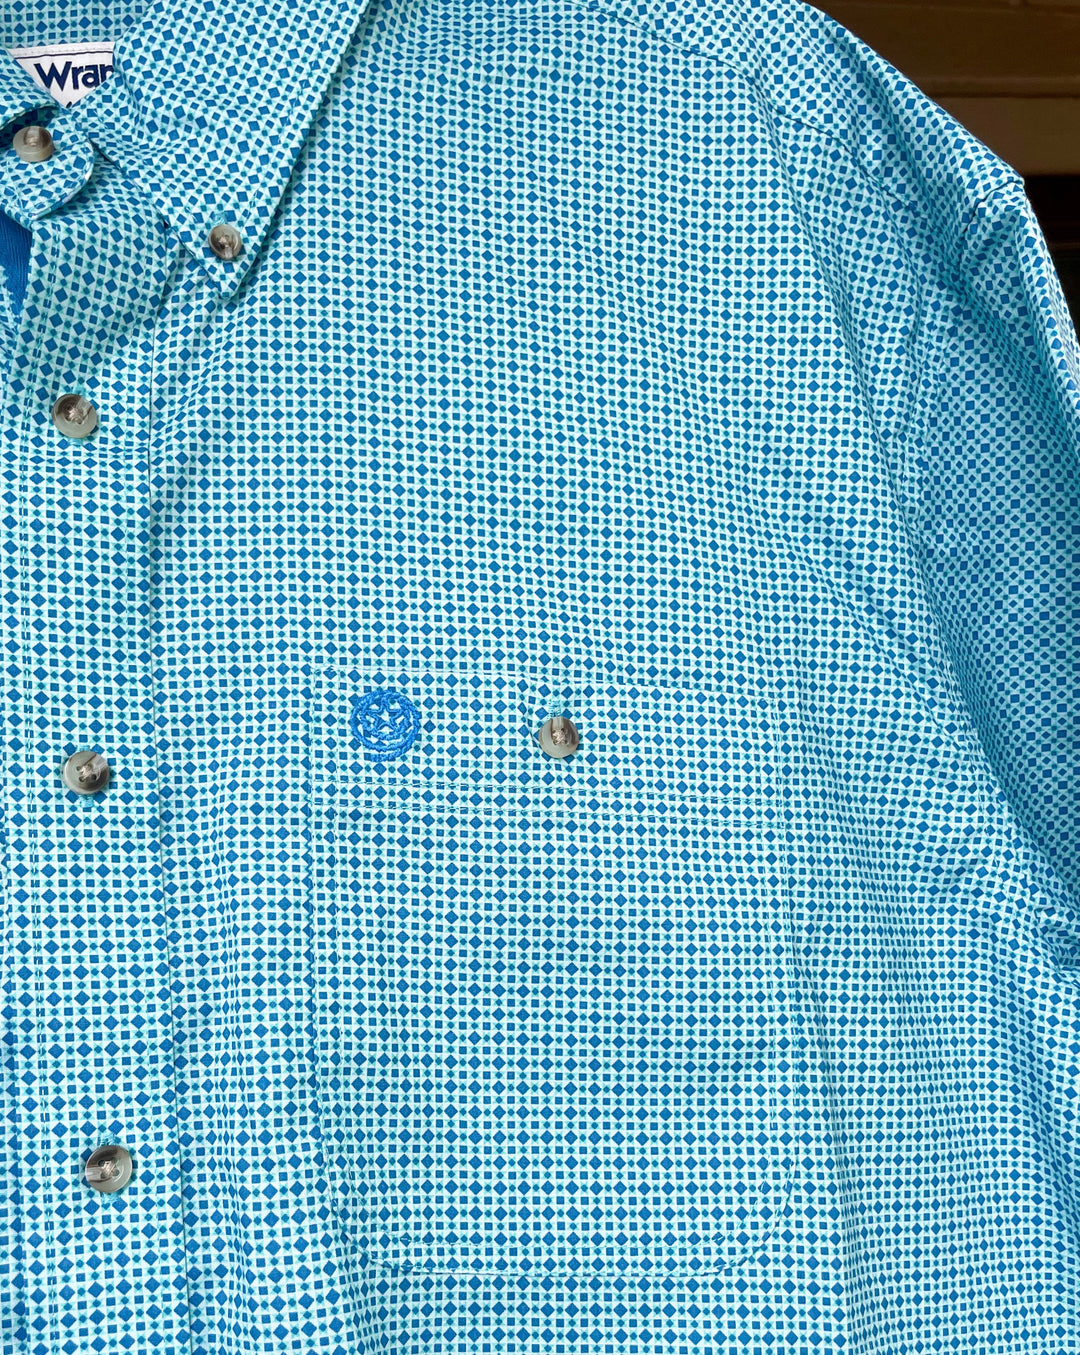 Wrangler Men's George Strait Collection SS Shirt